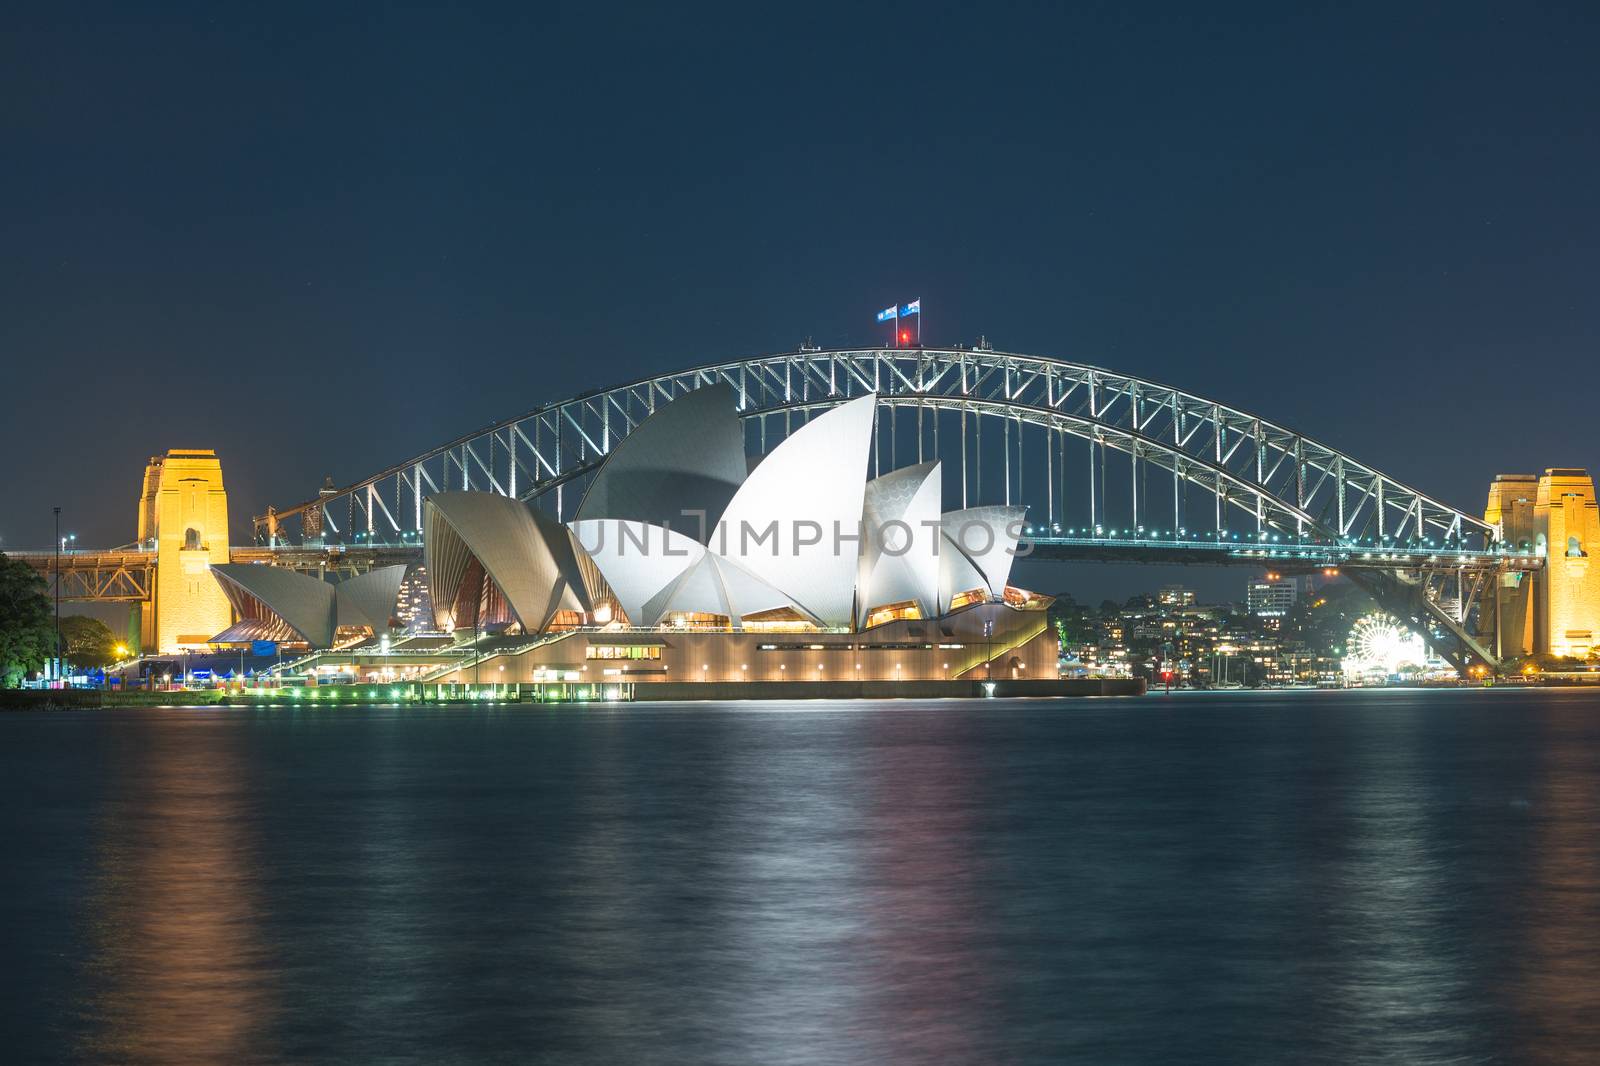 Sydney Harbour Bridge at night by jovannig